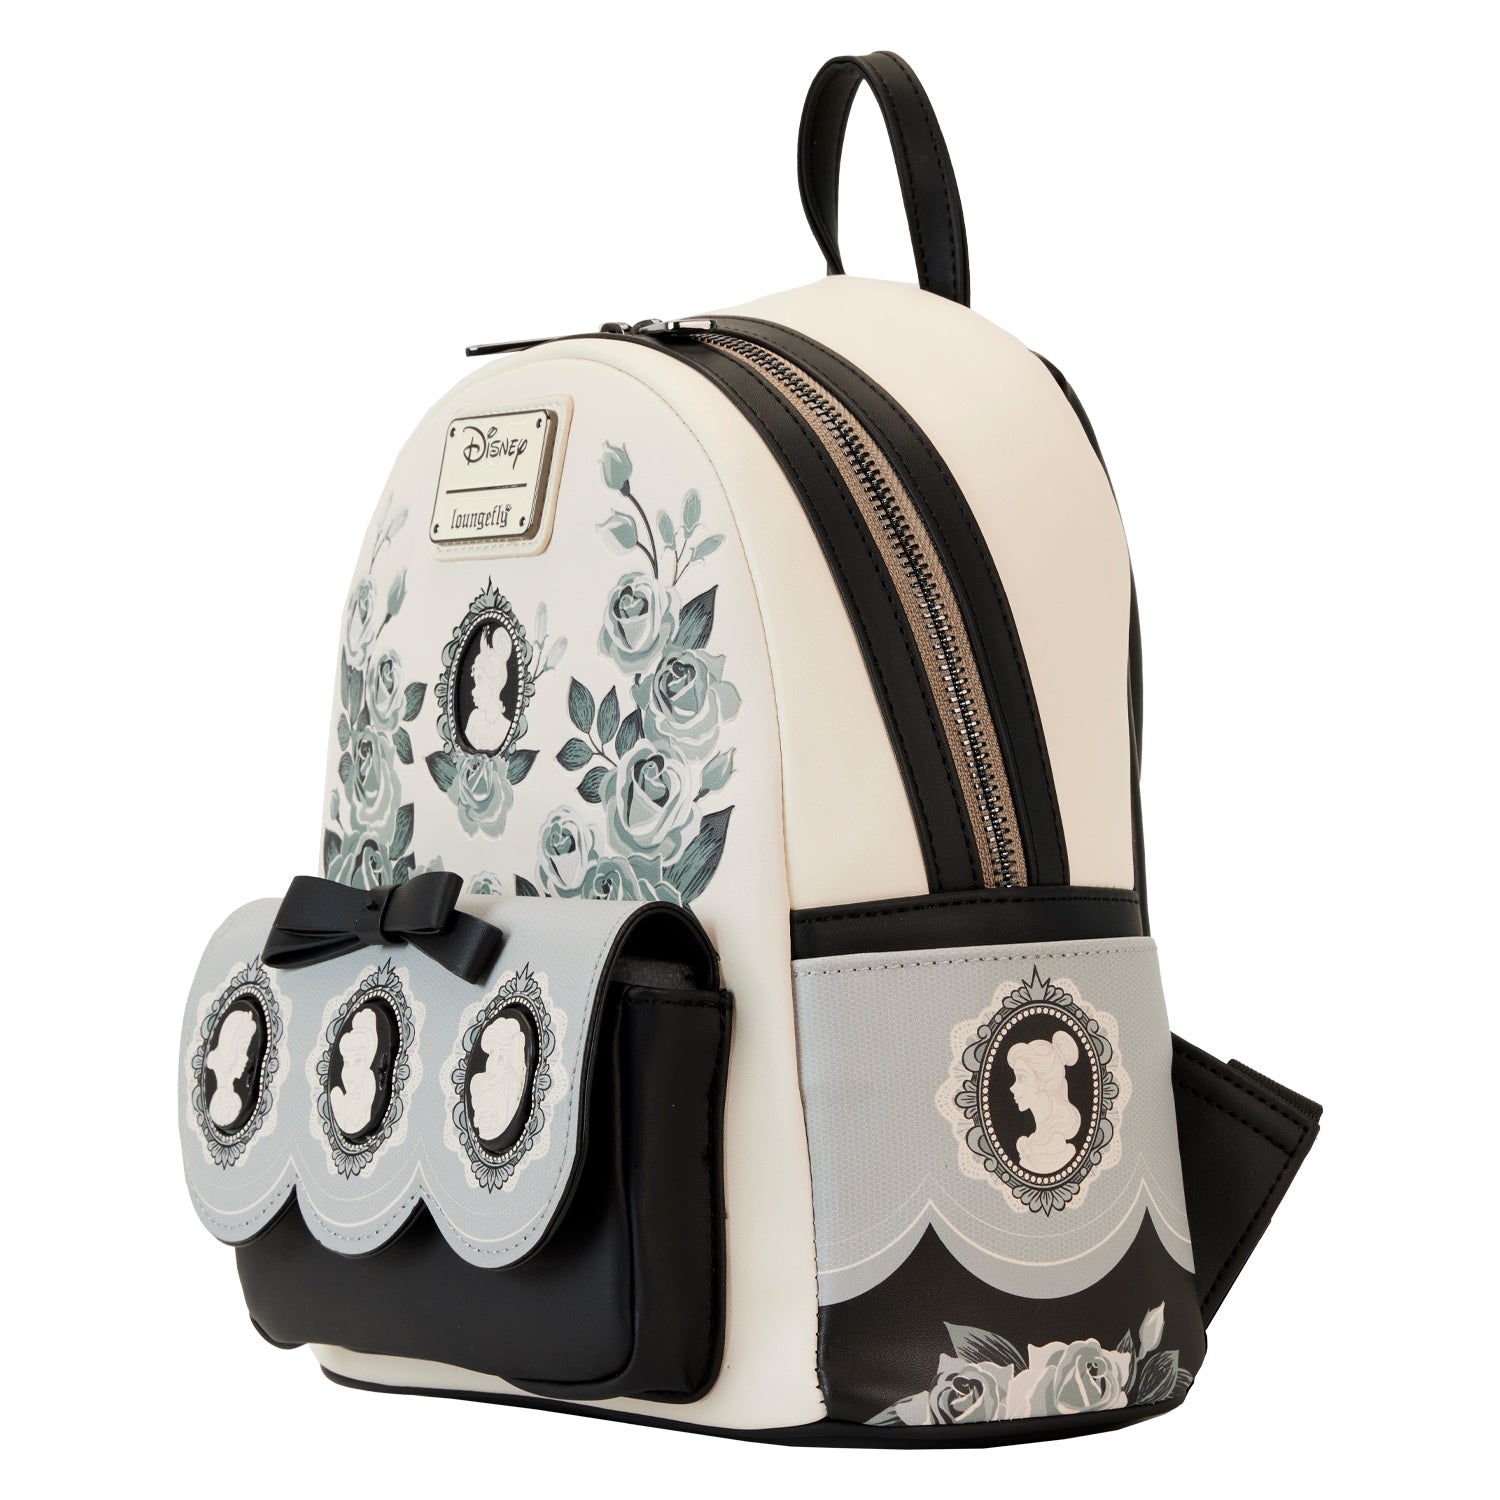 Loungefly x Disney Princess Cameos Mini Backpack